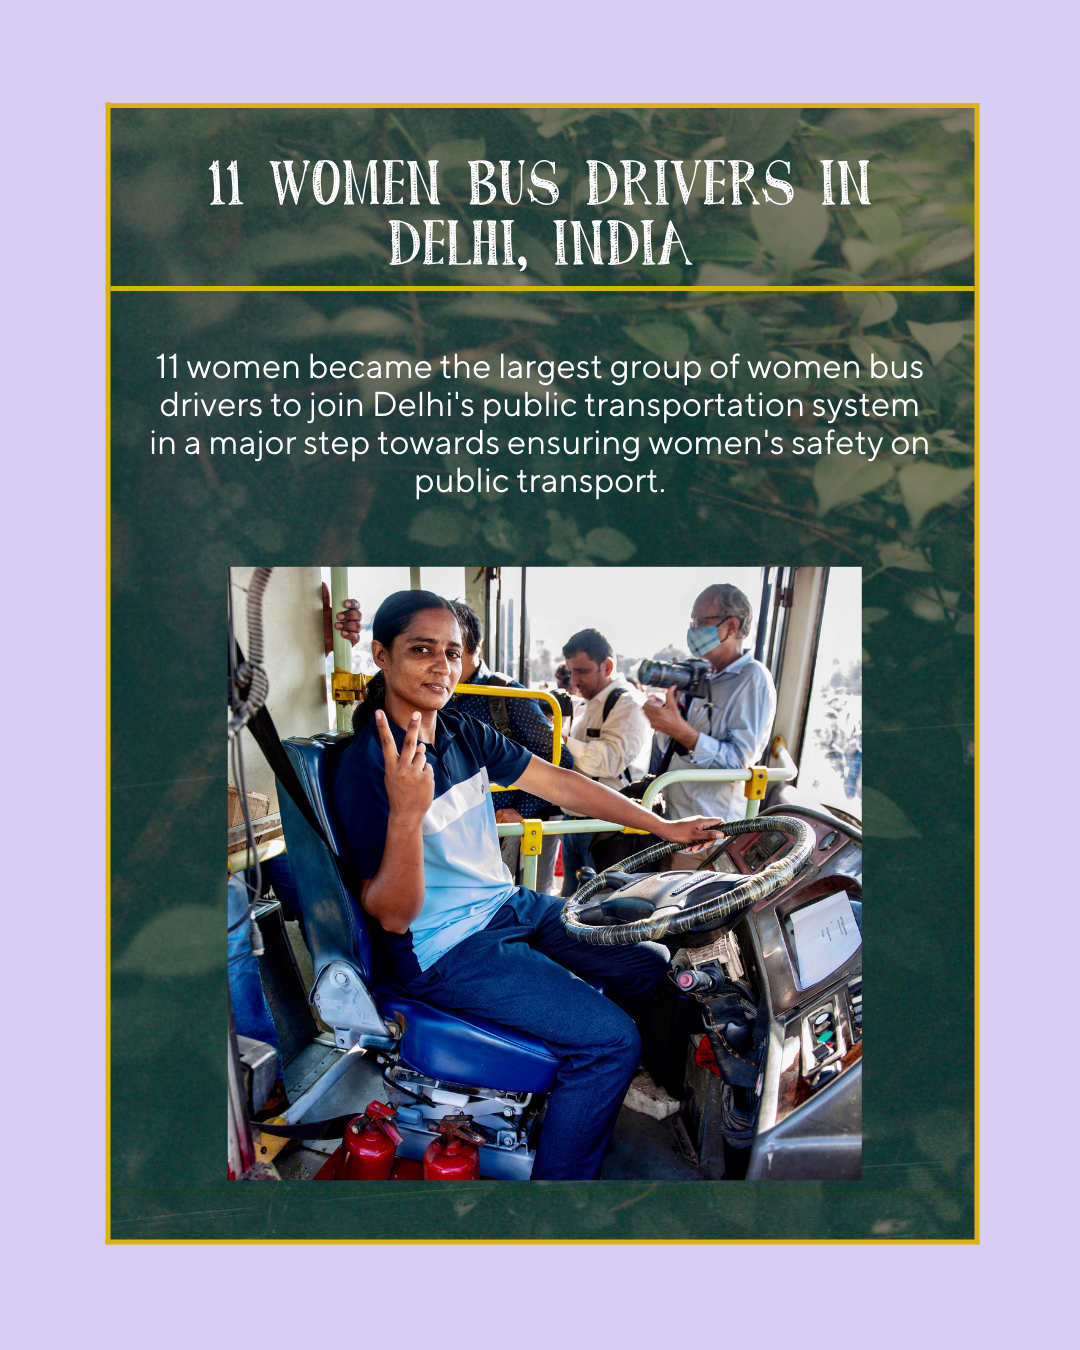 11 women bus drivers in Delhi, India